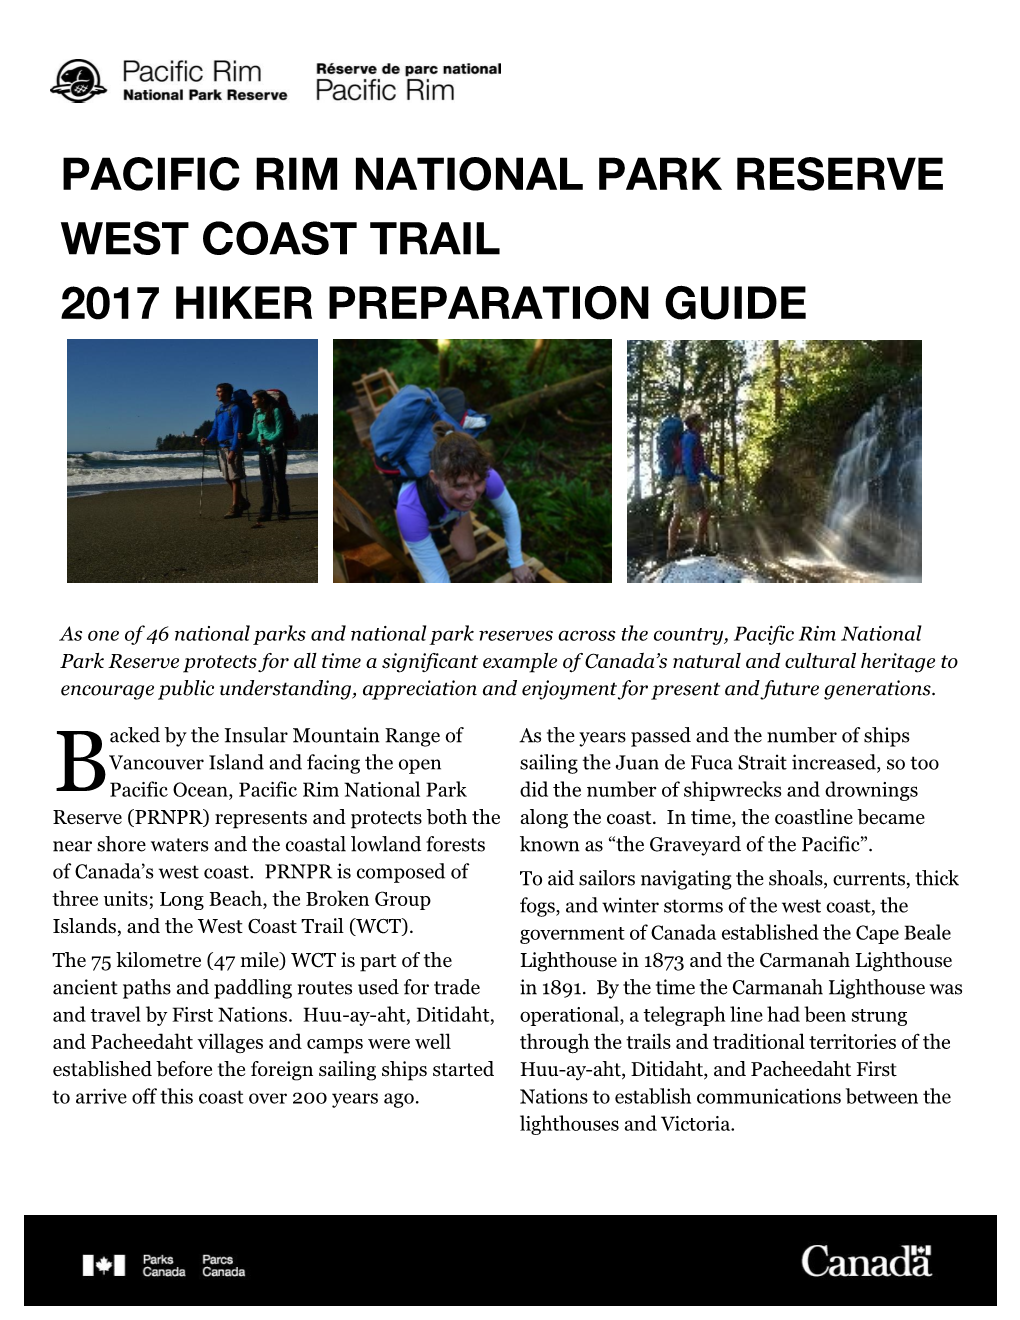 West Coast Trail 2017 Hiker Preparation Guide